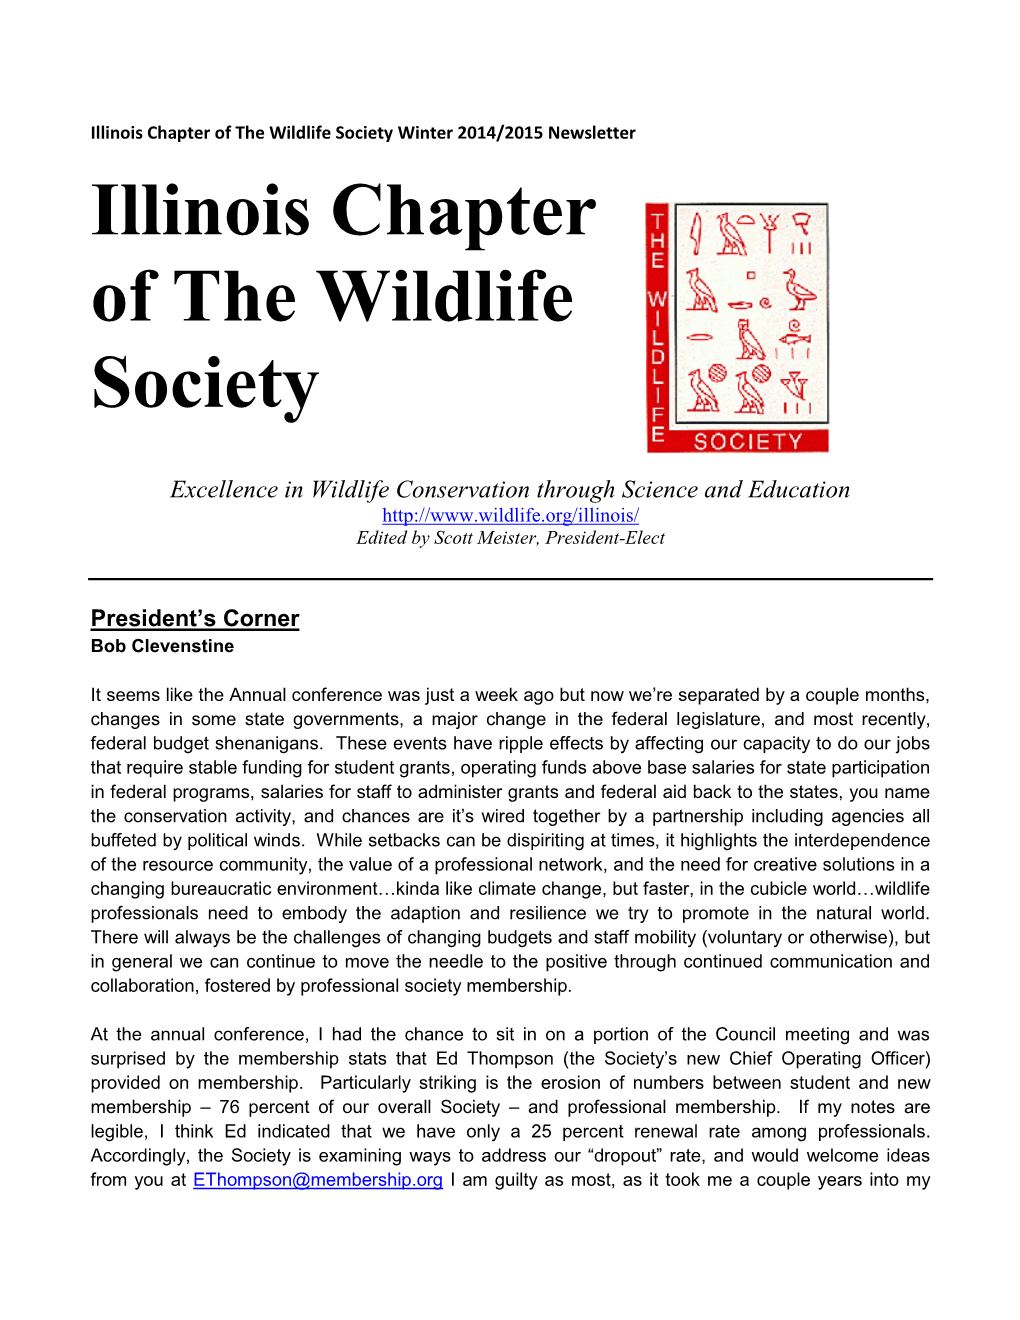 Illinois Chapter of the Wildlife Society Winter 2014/2015 Newsletter Illinois Chapter of the Wildlife Society